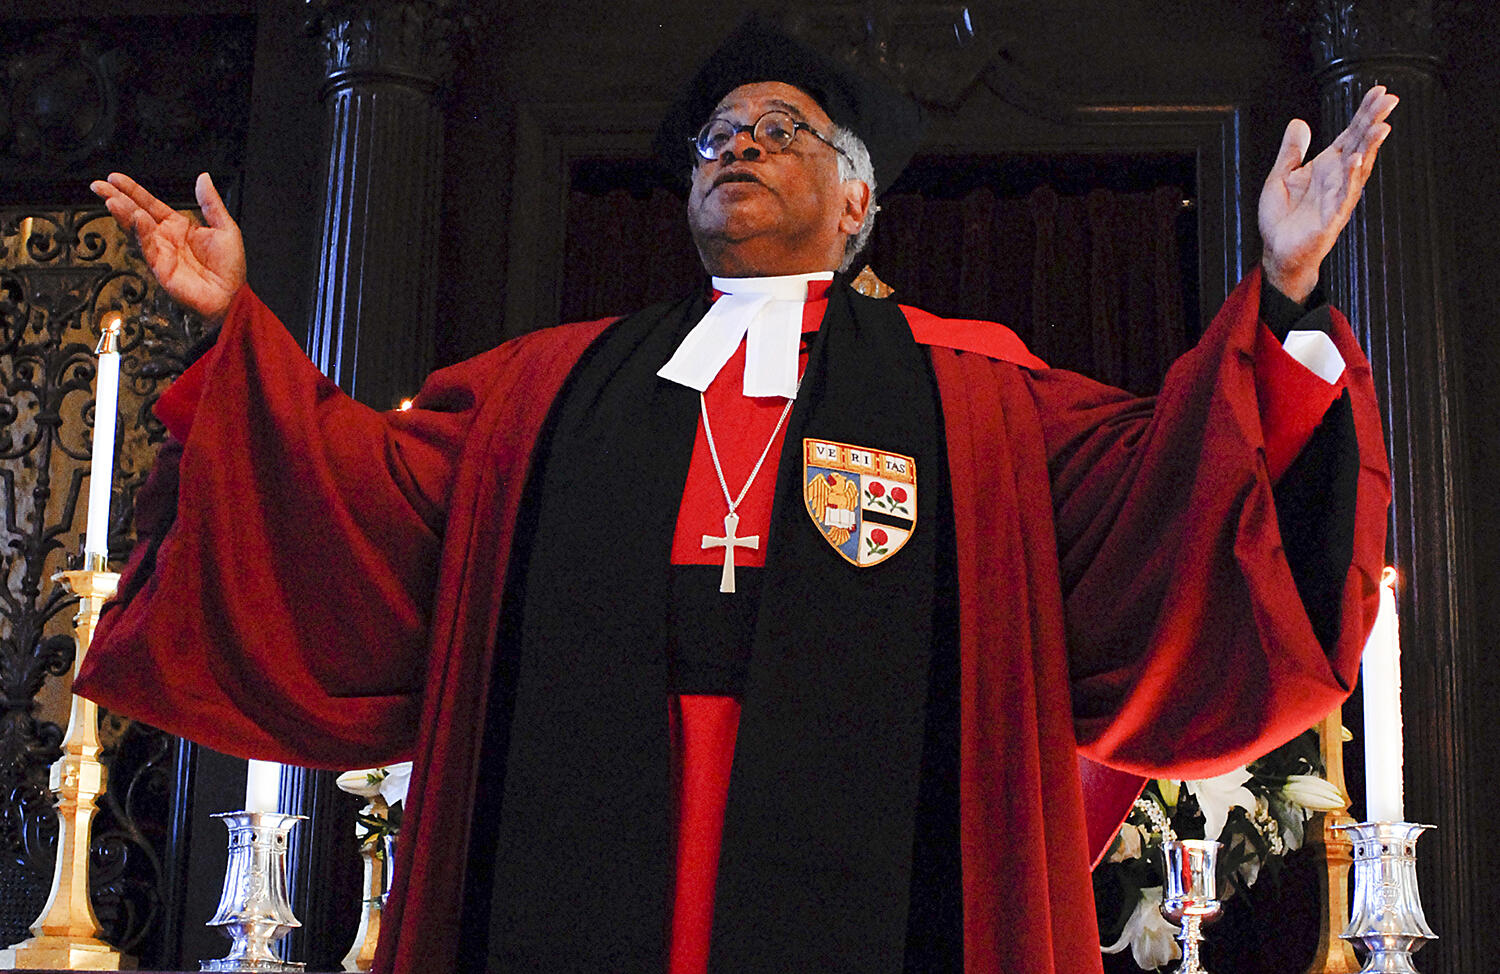 The Rev. Professor Peter J. Gomes